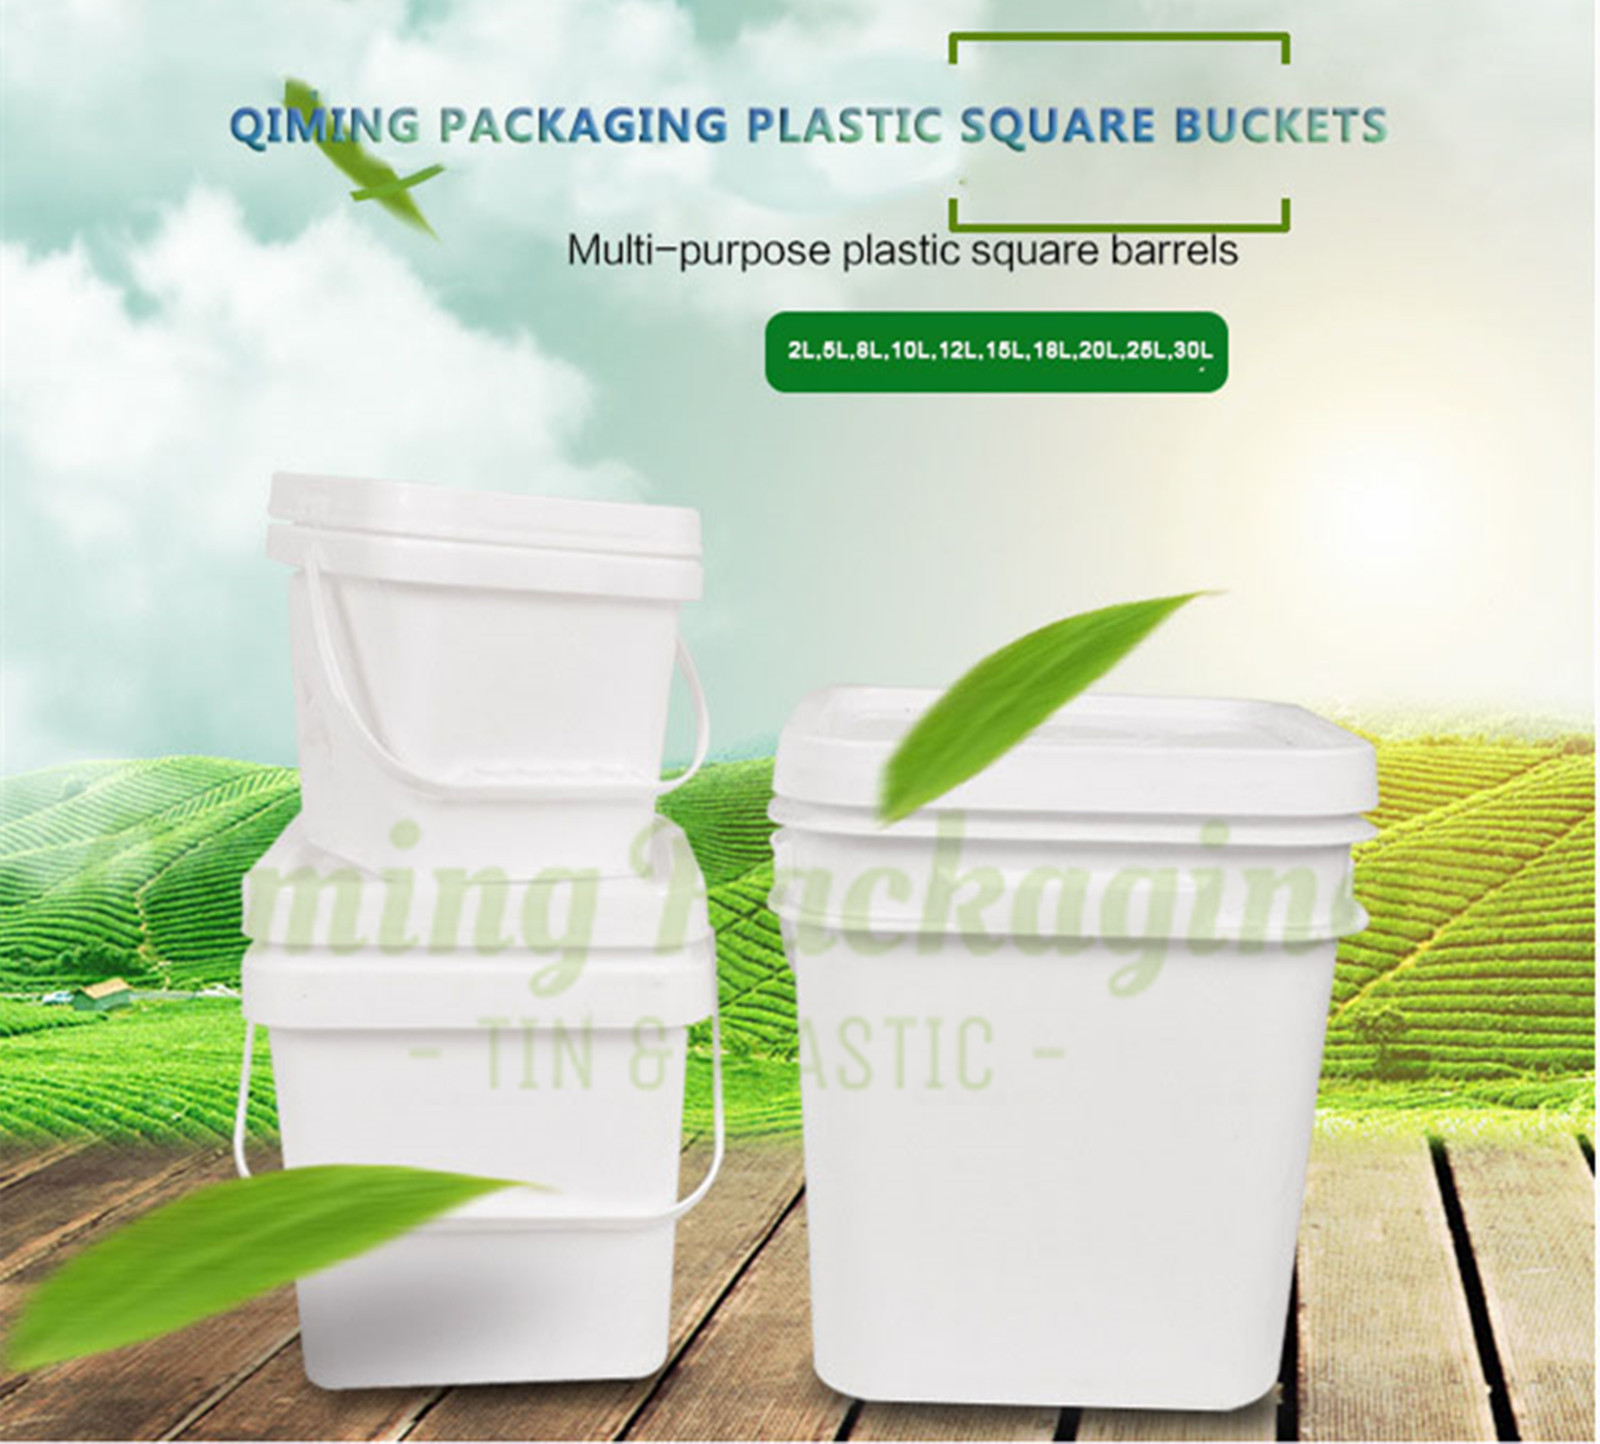 1-gallon Square Plastic Buckets - Qiming Packaging